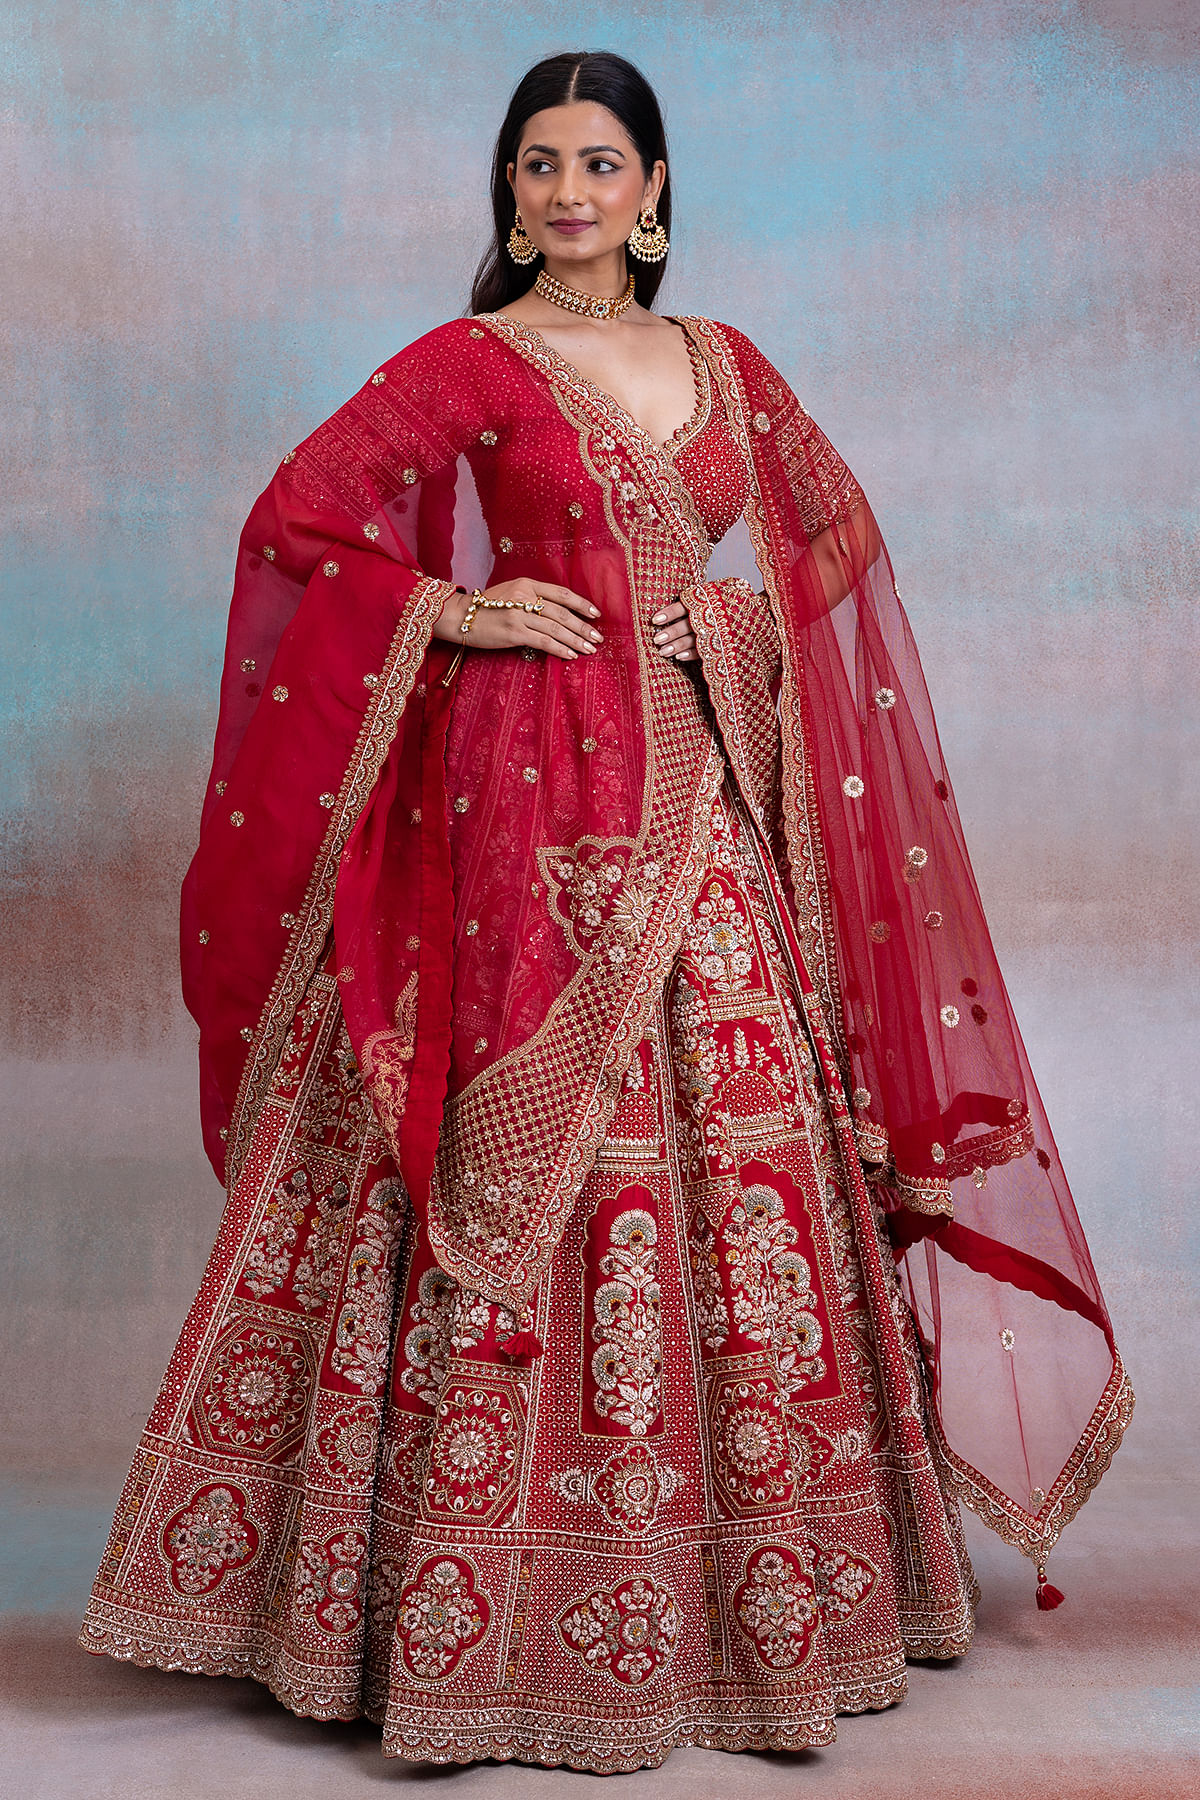 Buy Krishna Mehta Women's Velvet Bridal Lehenga with Double Dupatta  (Maroon, Free Size) at Amazon.in